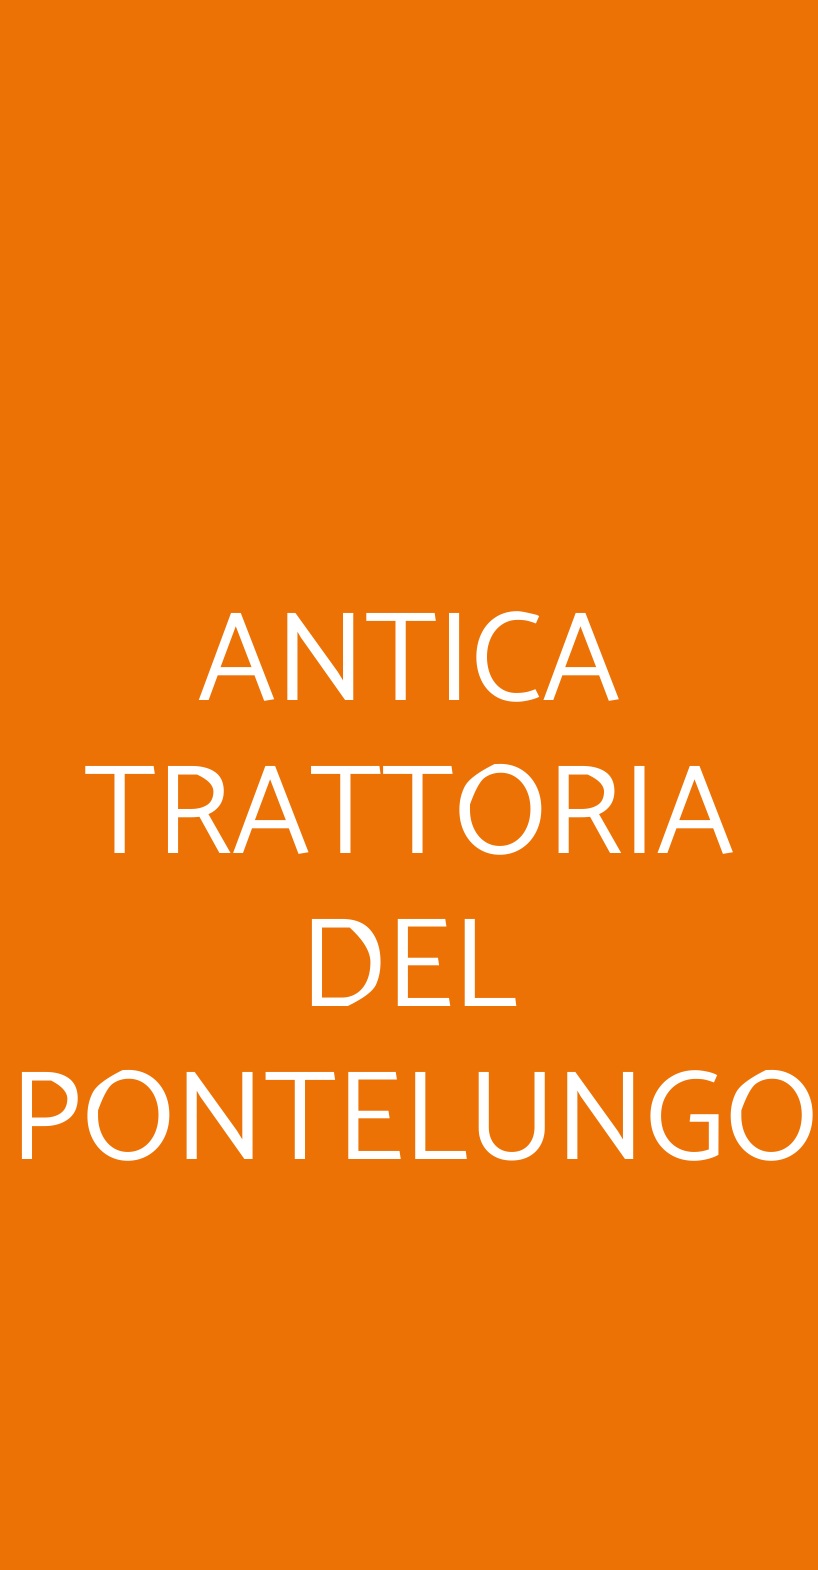 ANTICA TRATTORIA DEL PONTELUNGO Bologna menù 1 pagina